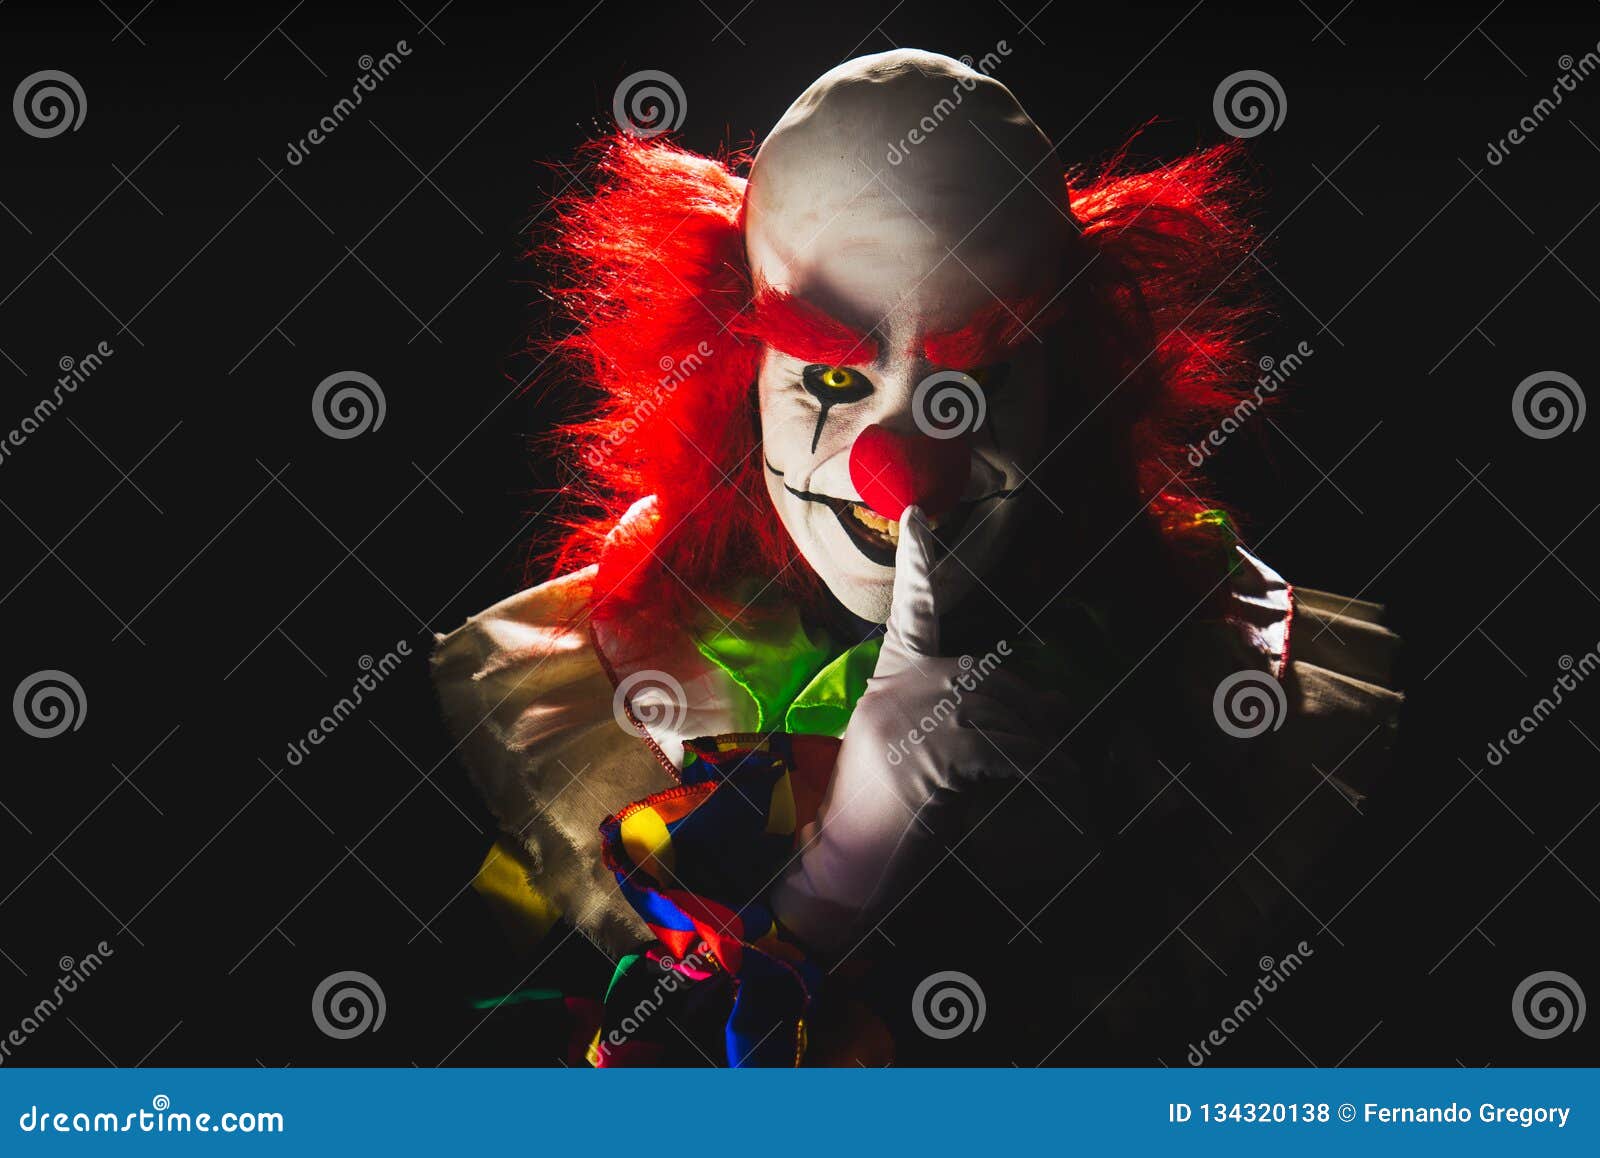 scary clown on a dark background